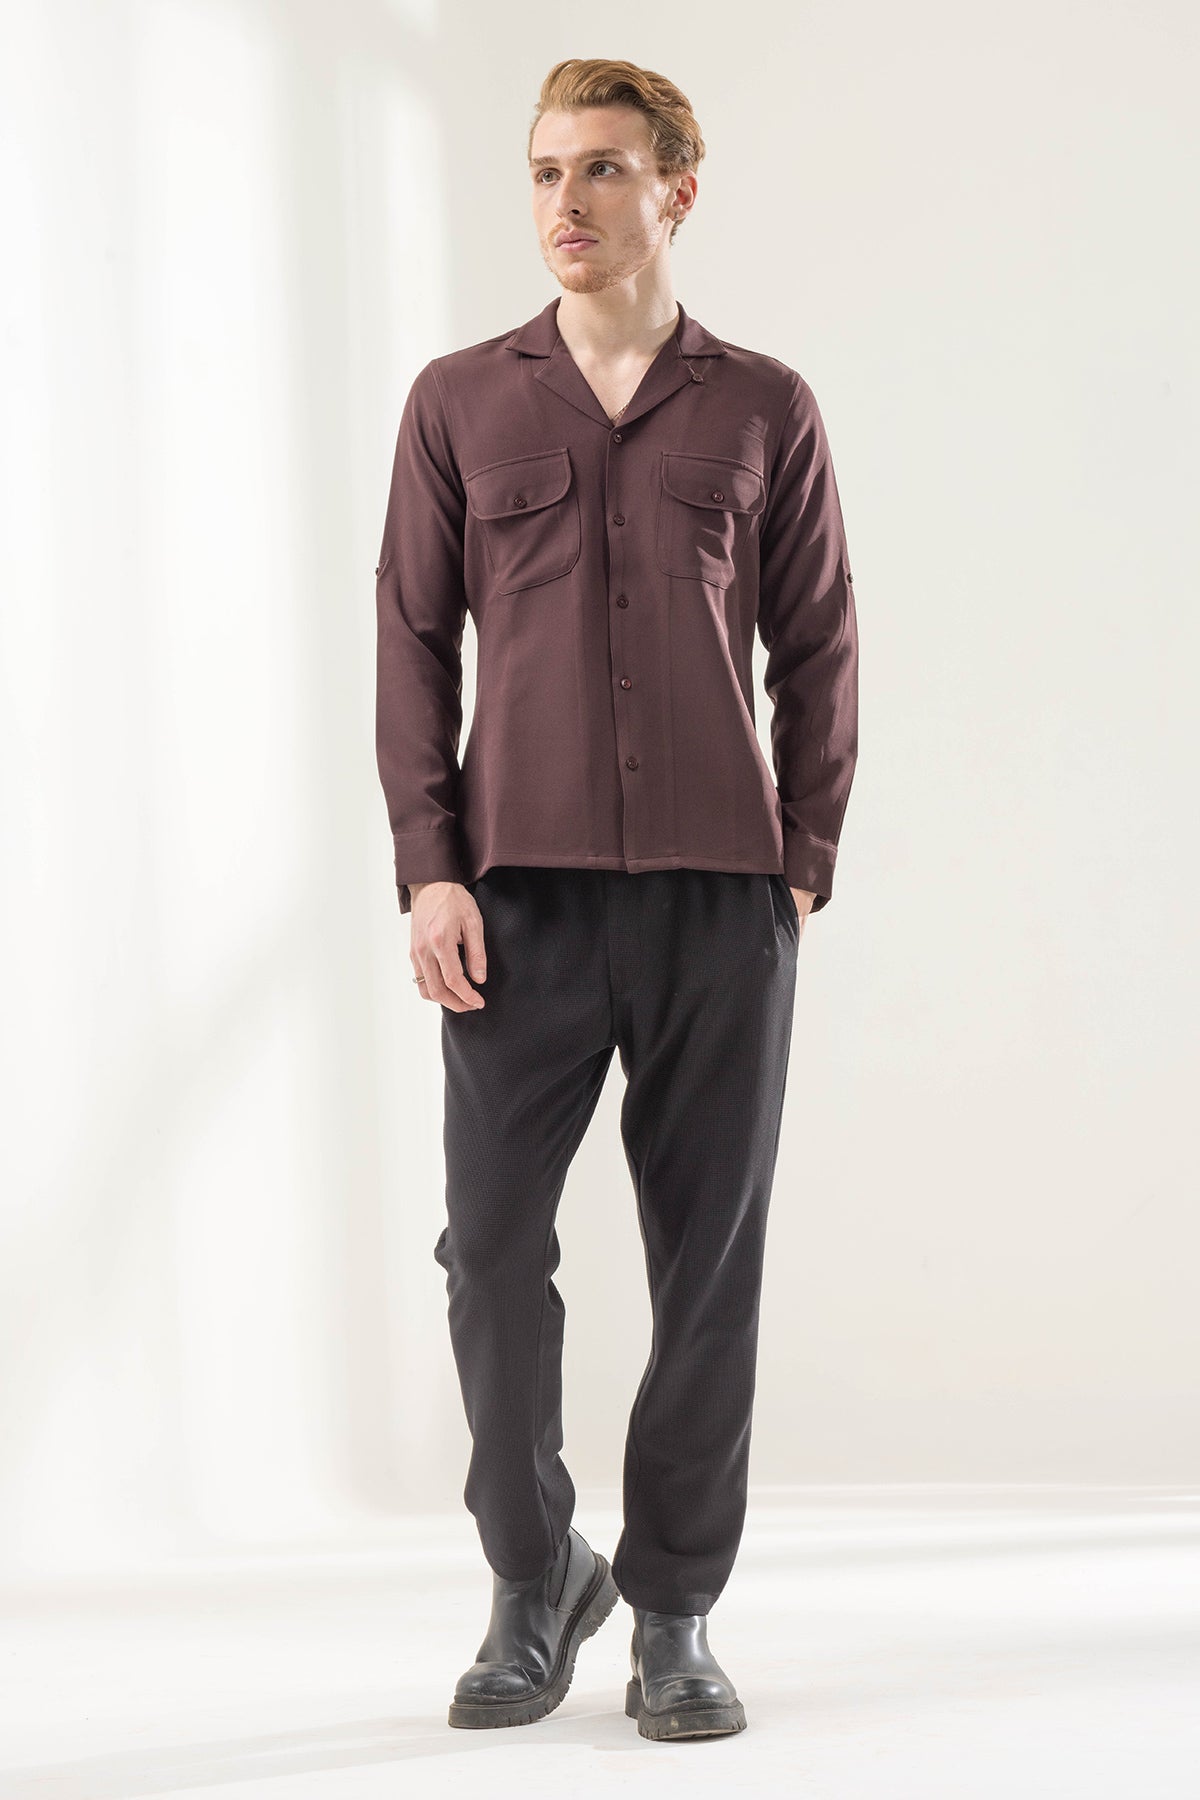 Brown-pocket shirt coord set